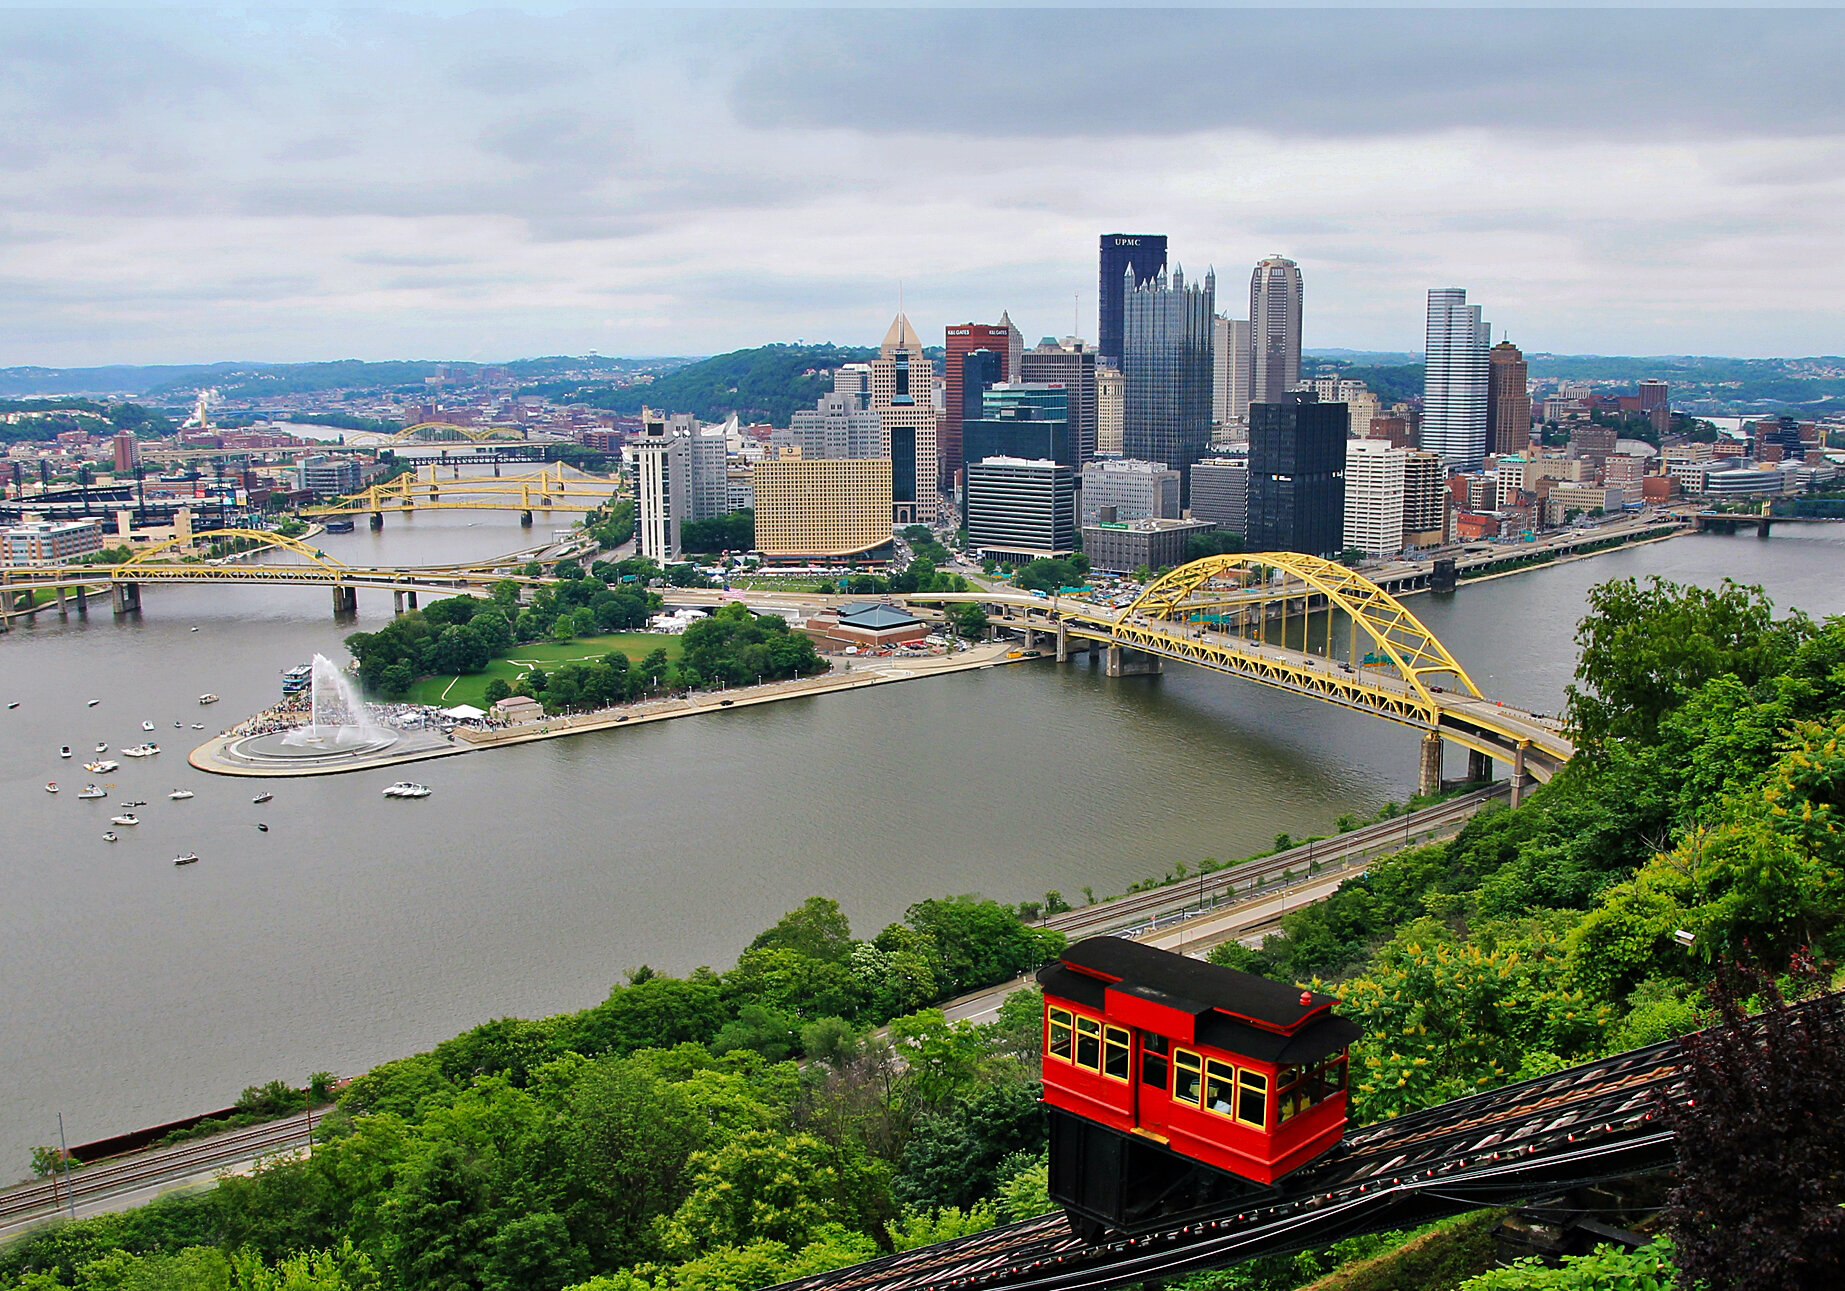 Image courtesy of Visit Pittsburgh.